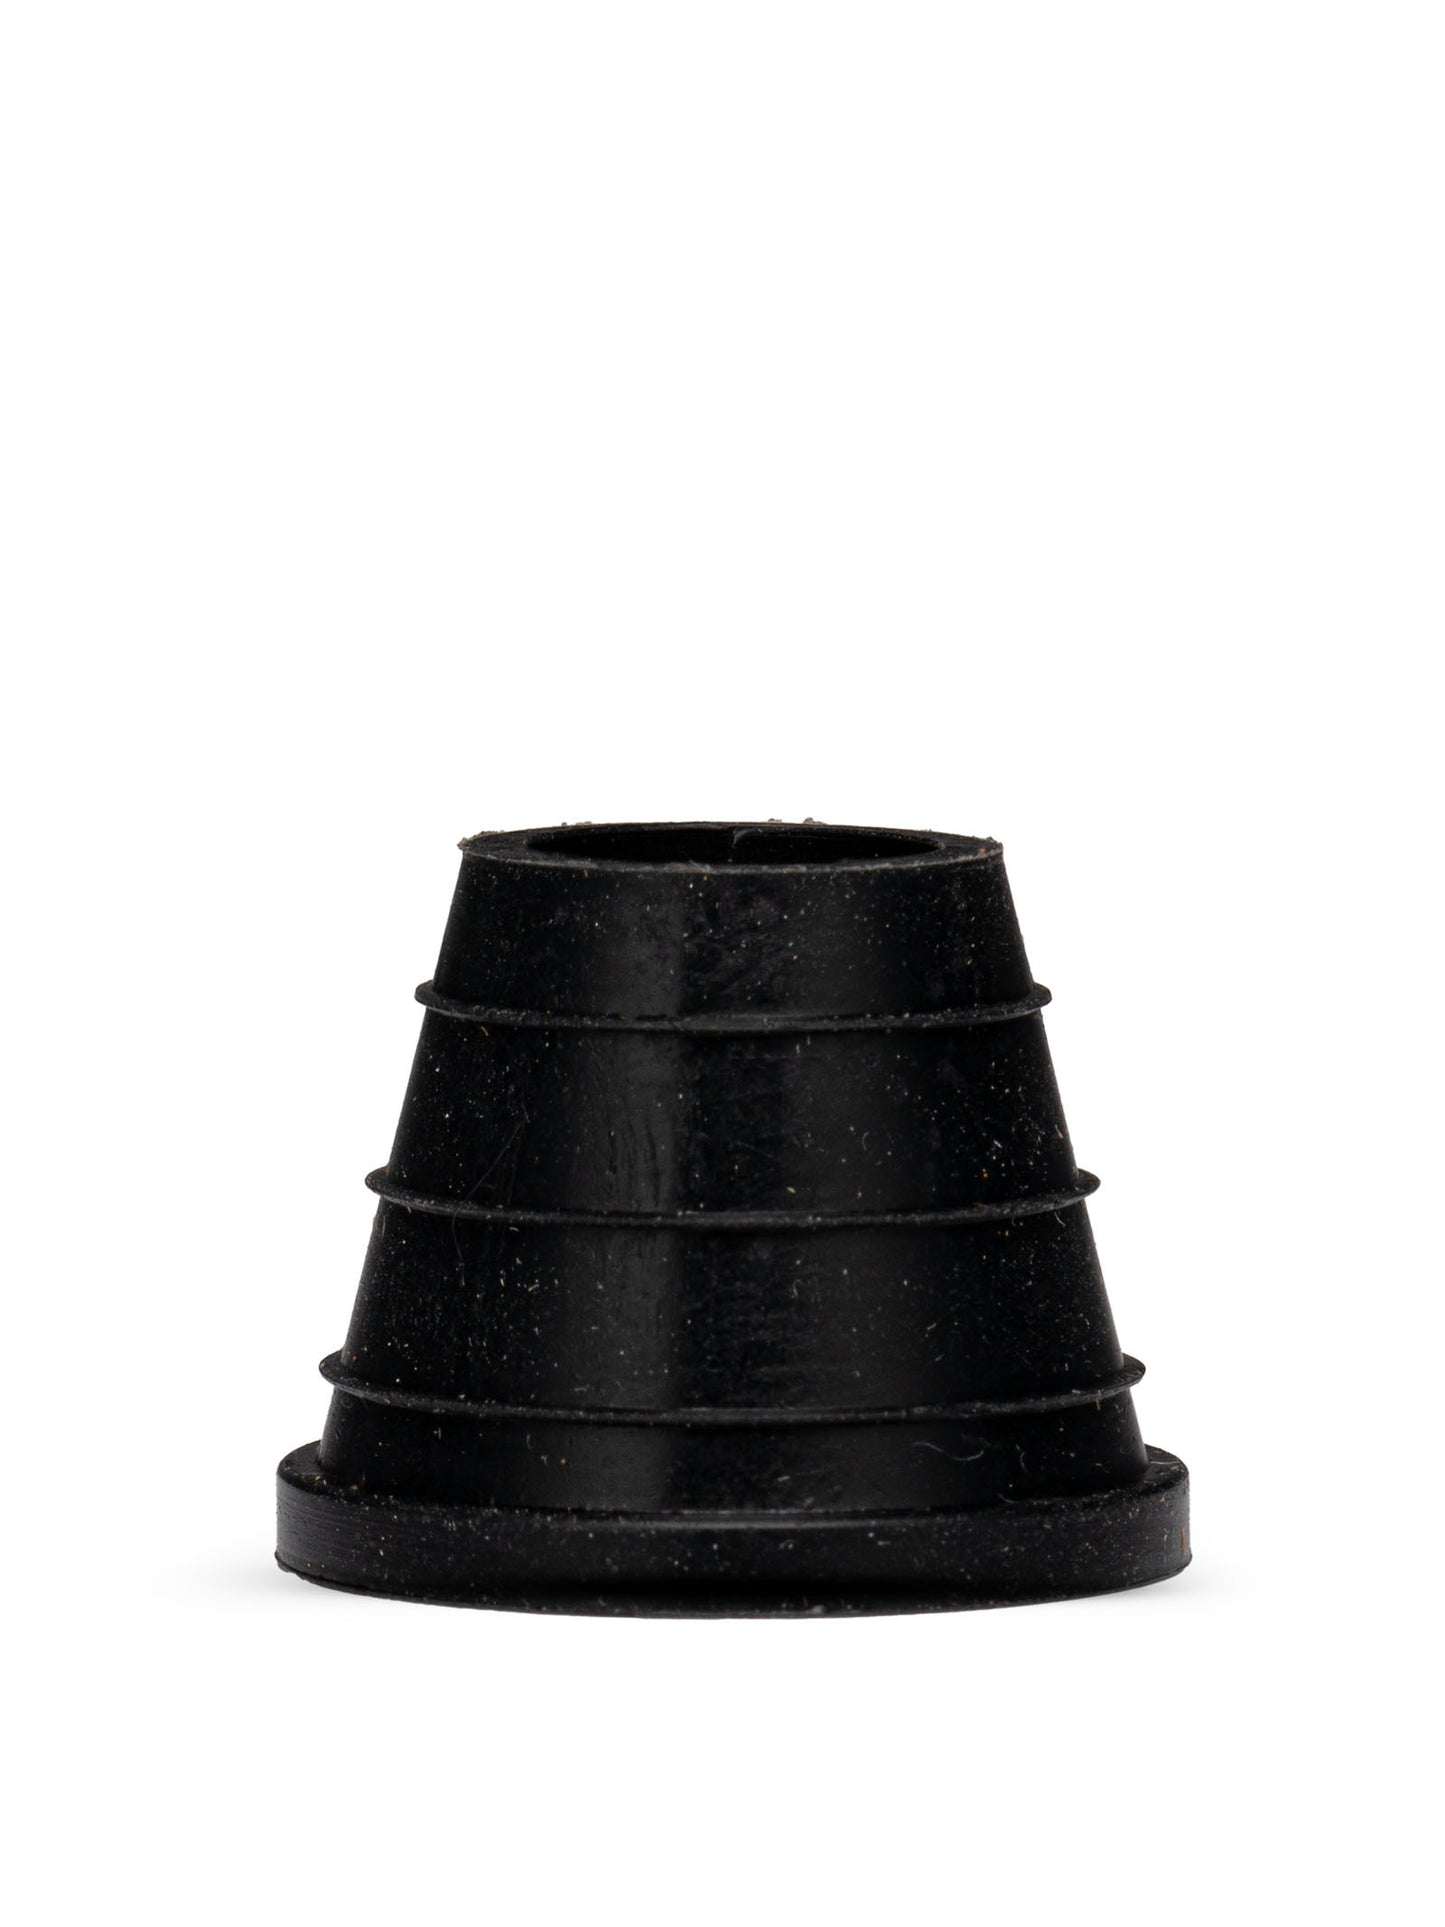 Thick Rubber Shisha Hookah Bowl Grommet - Black